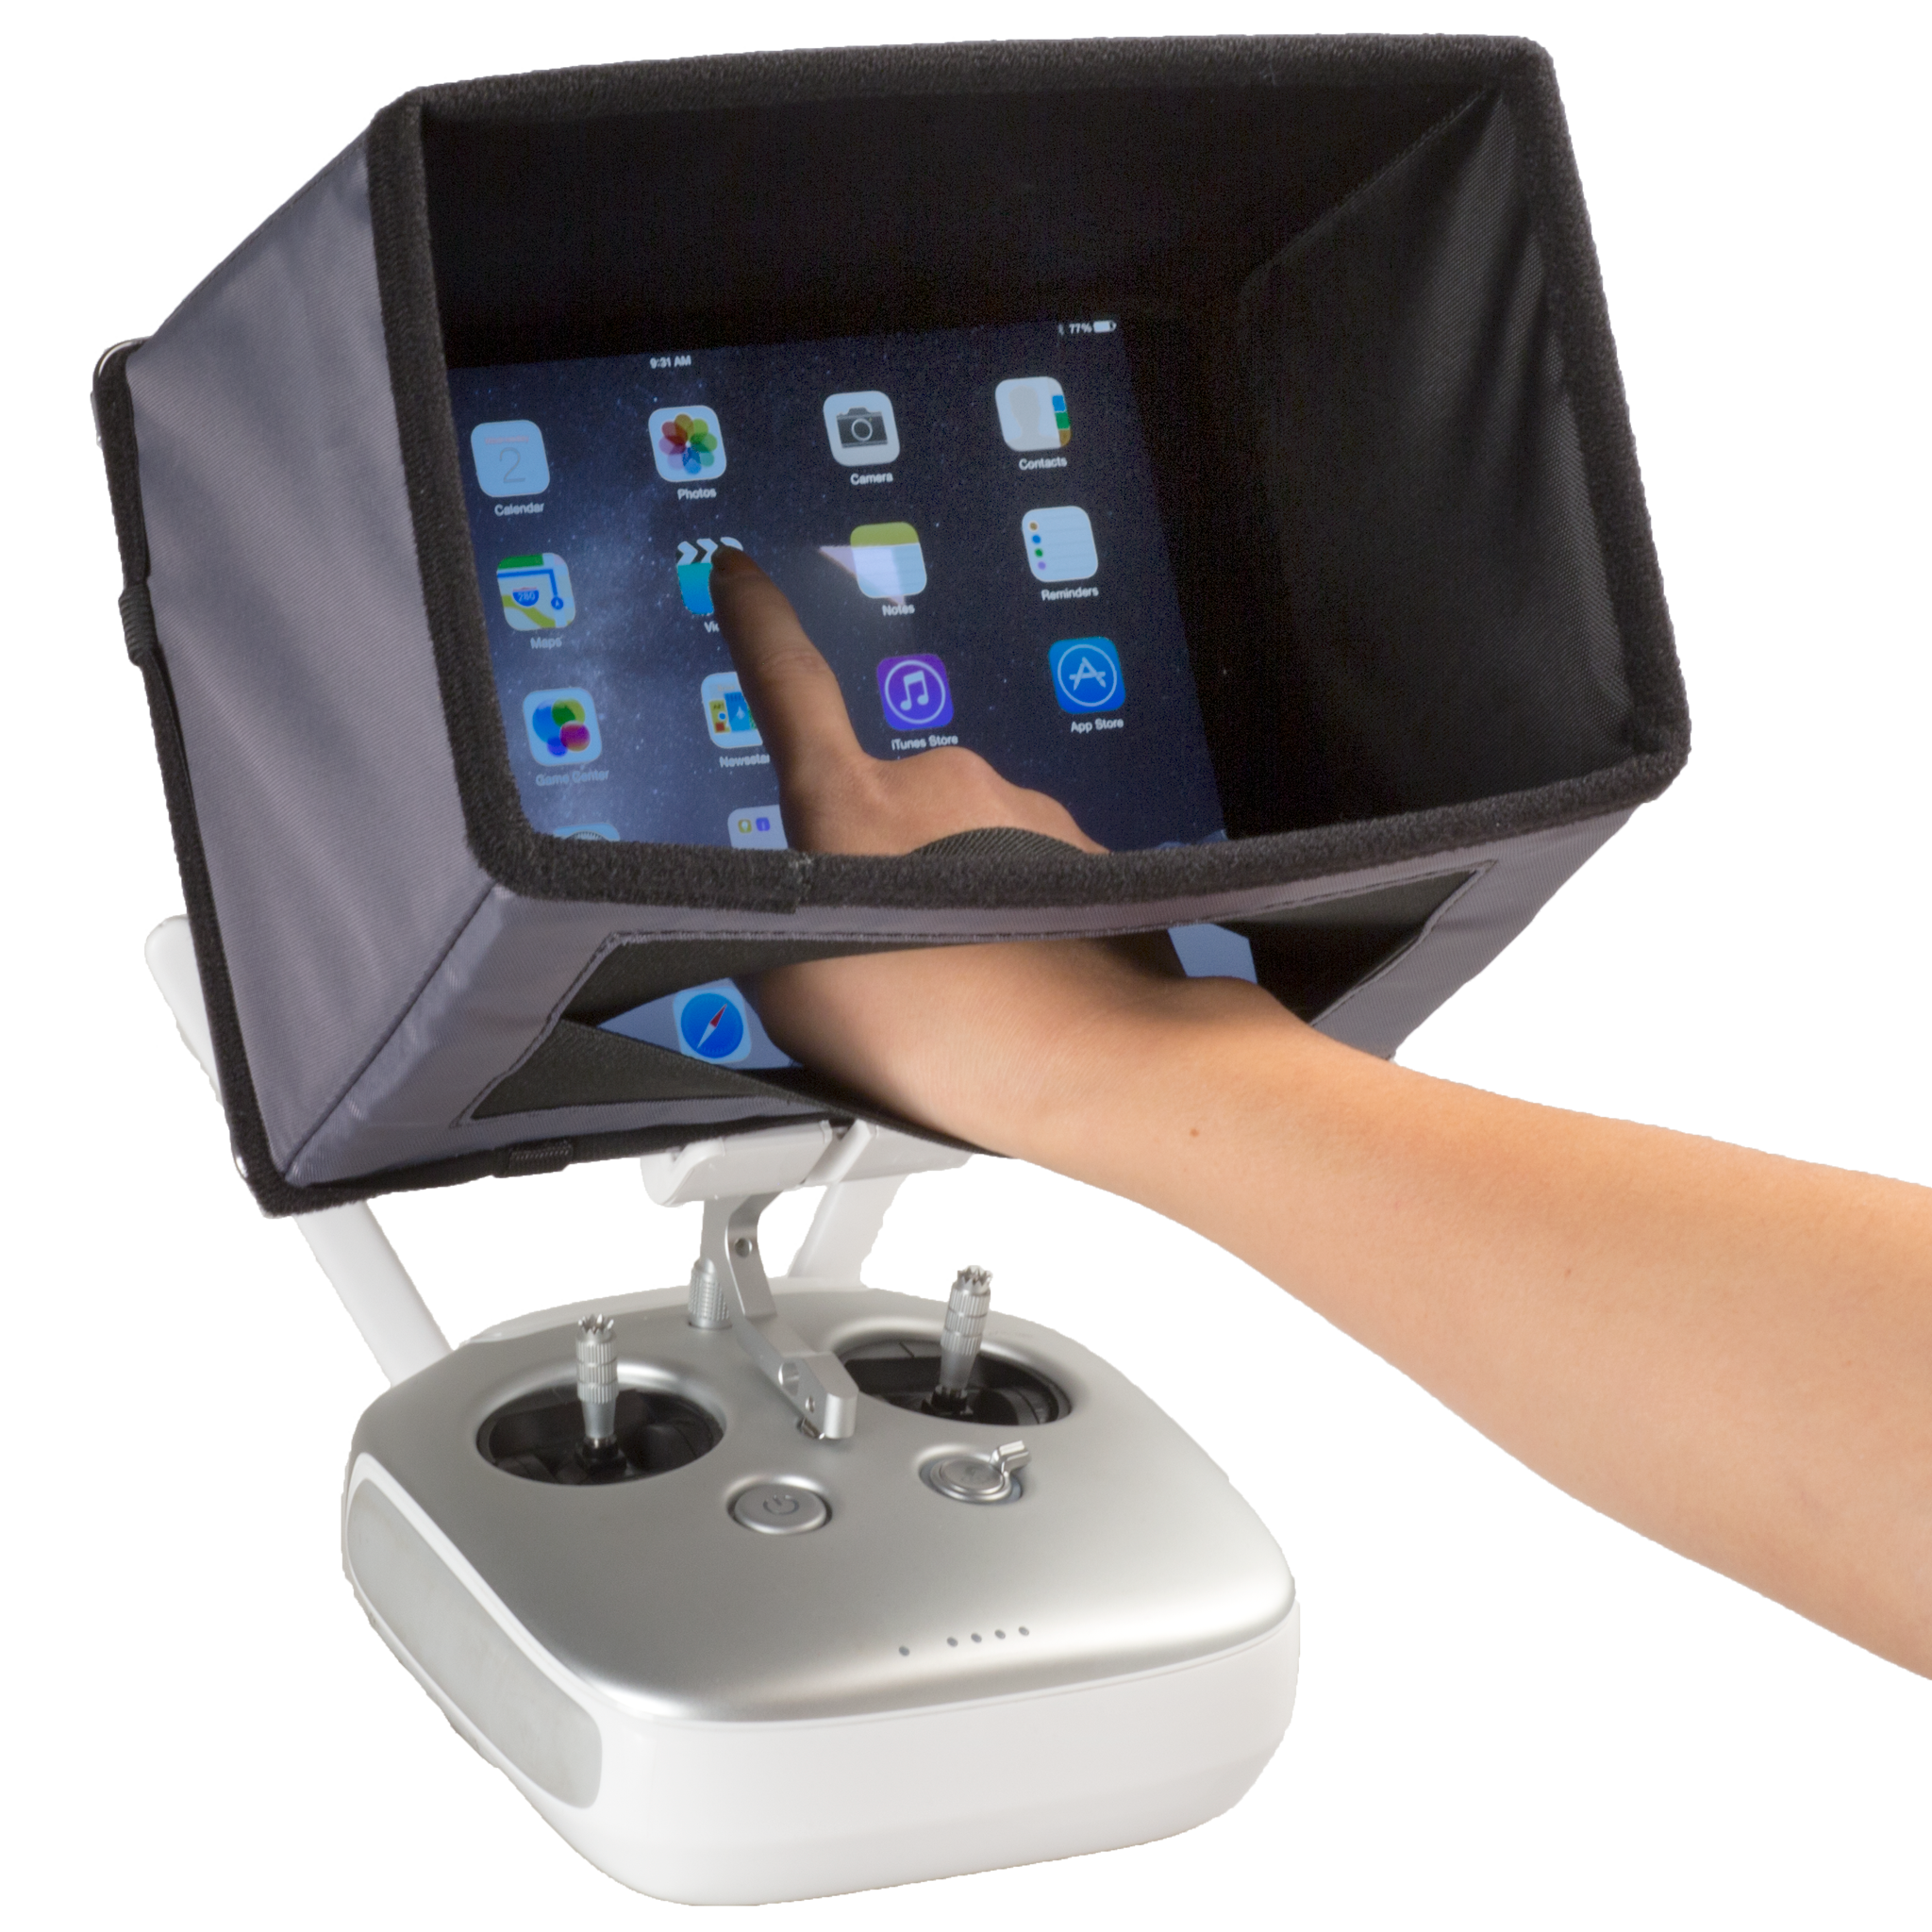 Hoodman Drone Aviator Base hood sunshade iPads tablets